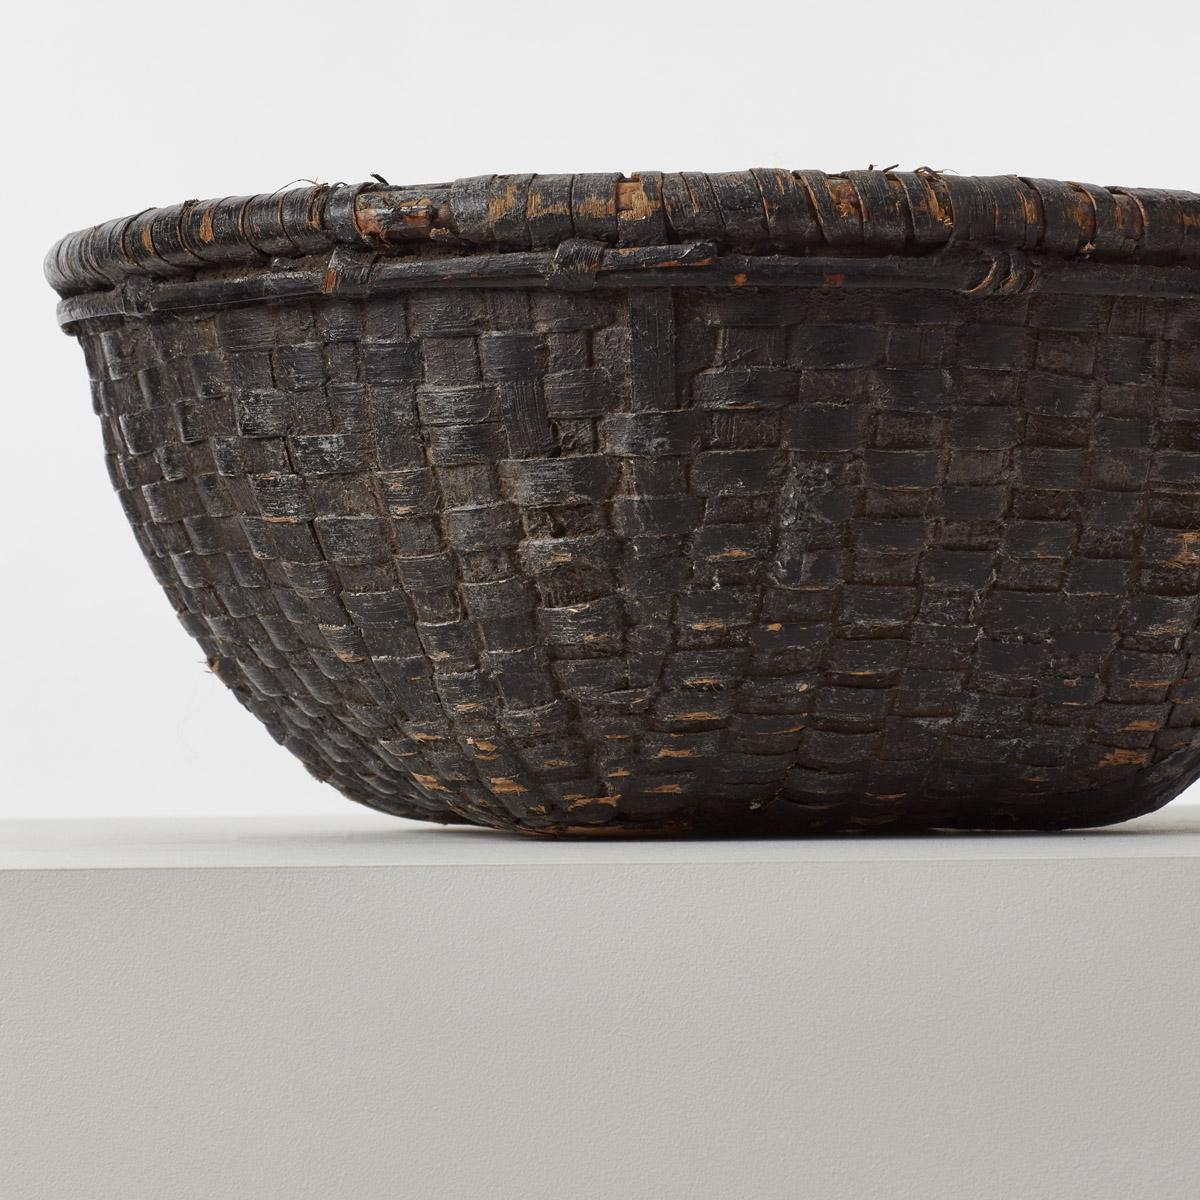 Hand-Woven 20th century Japanese antique vintage handwoven grain or fruit basket